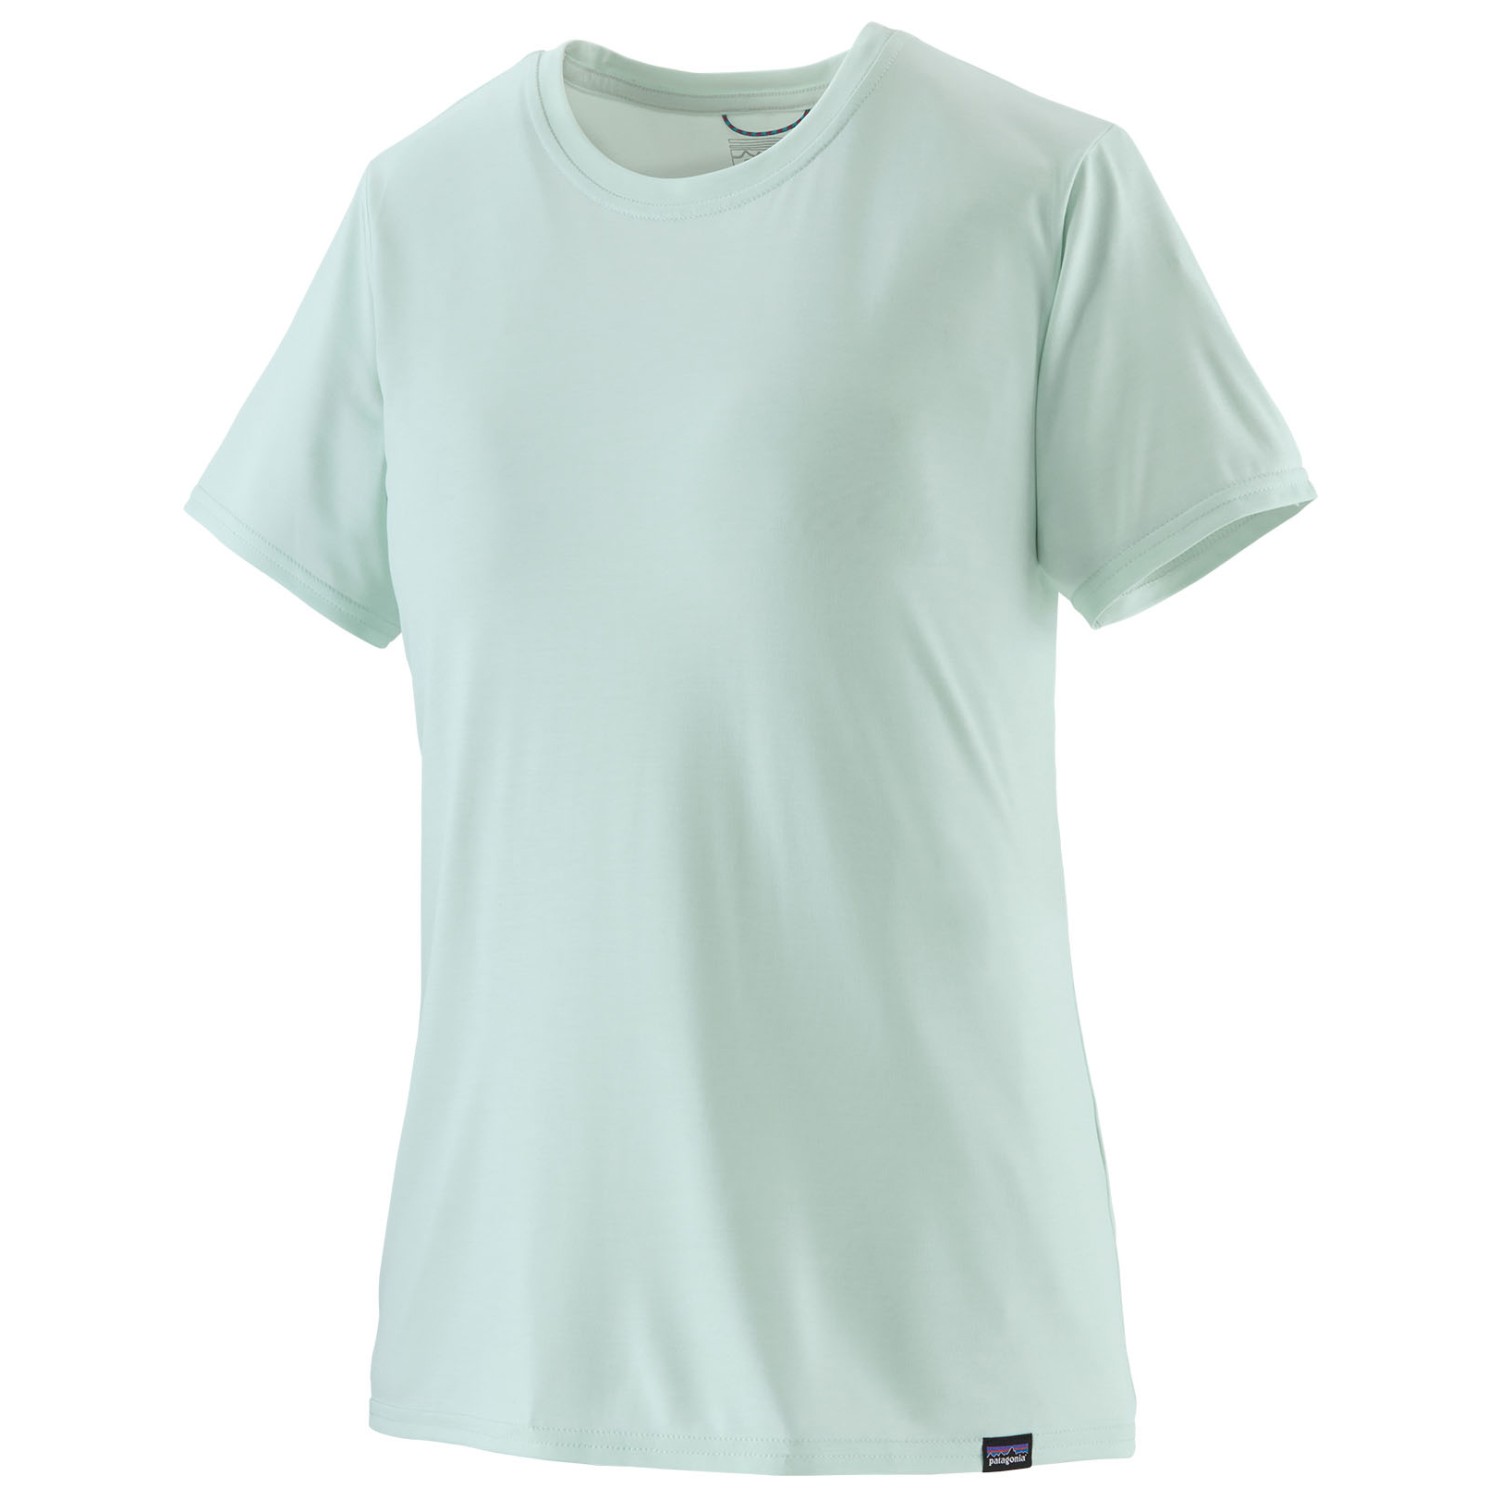 Функциональная рубашка Patagonia Women's Cap Cool Daily Shirt, цвет Wispy Green/Light Wispy Green X Dye capilene cool повседневная рубашка без рукавов patagonia цвет viking blue navy blue x dye